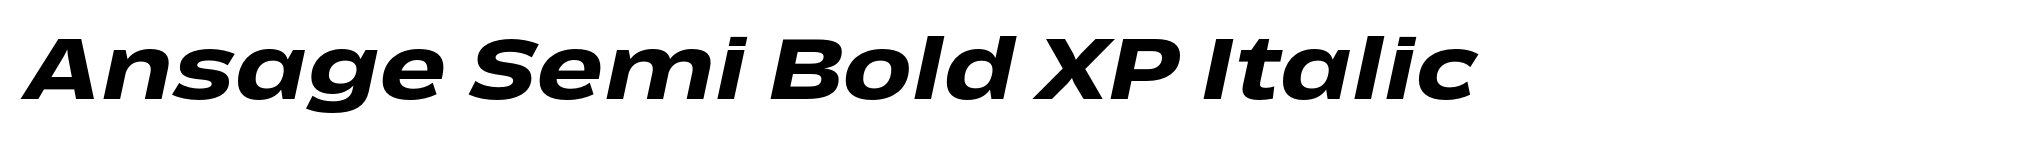 Ansage Semi Bold XP Italic image